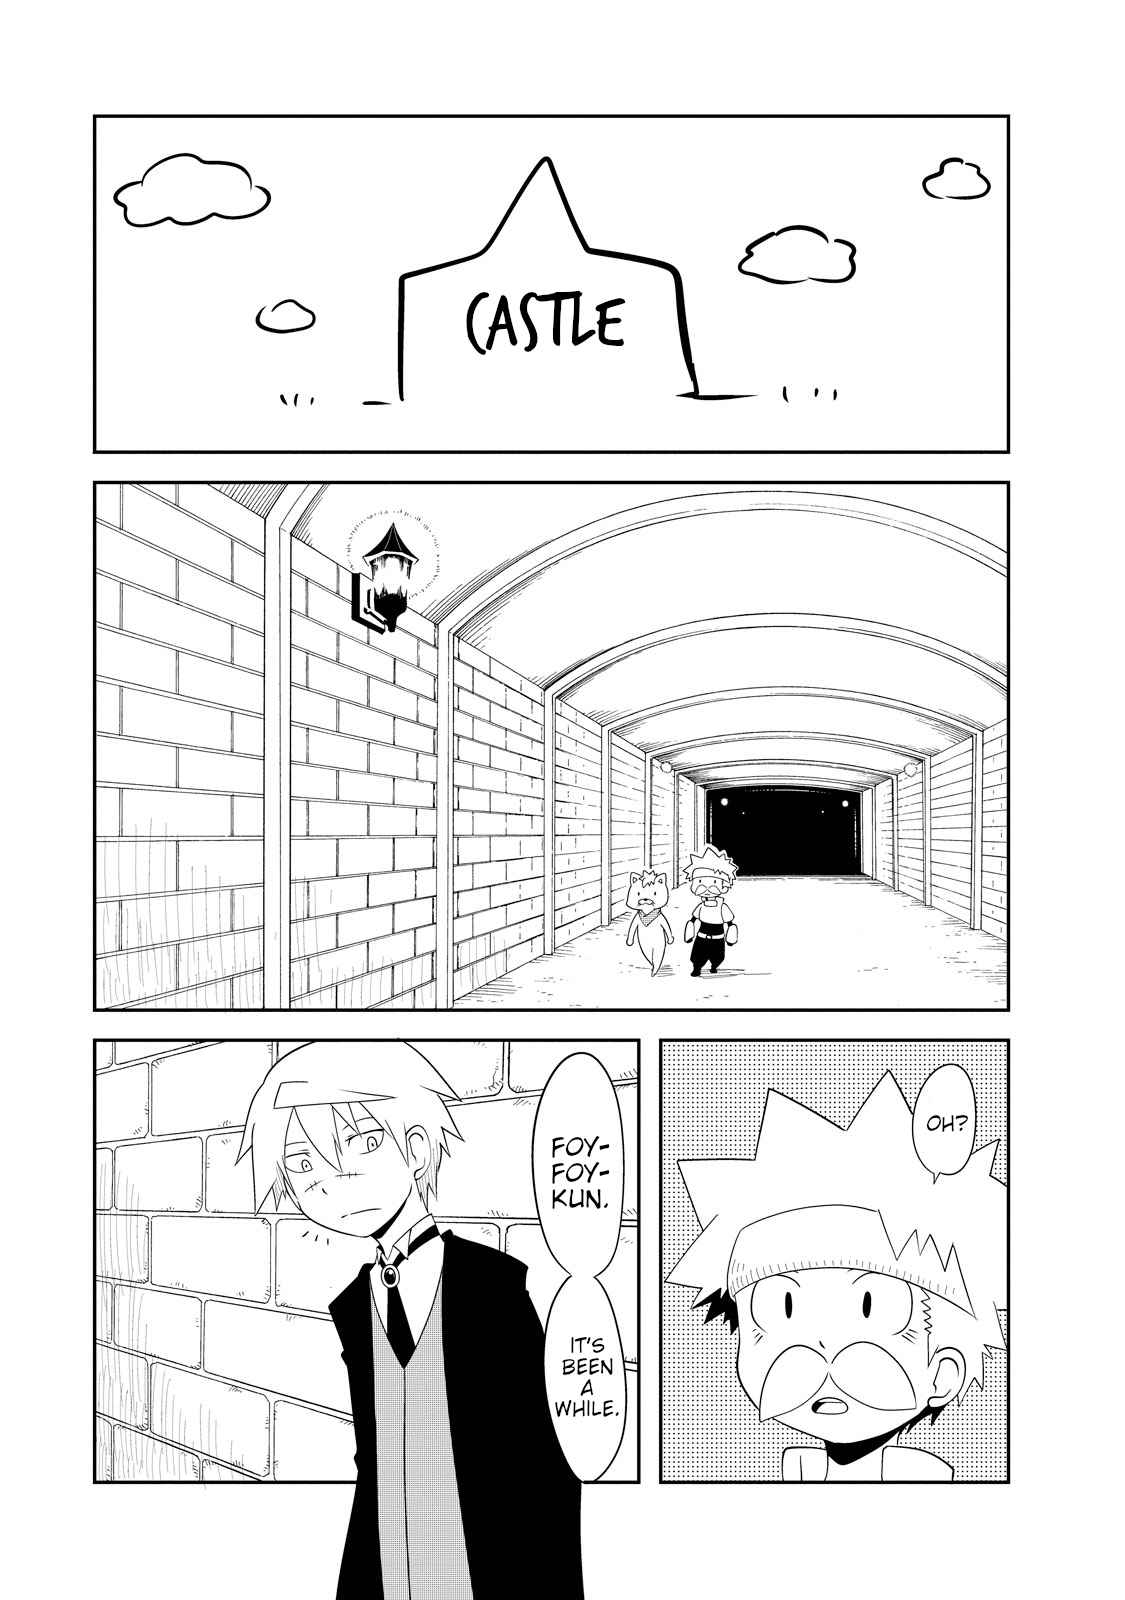 Senyuu. Main Quest Part 2 Vol. 1 Ch. 3 Alba Returns to the Castle